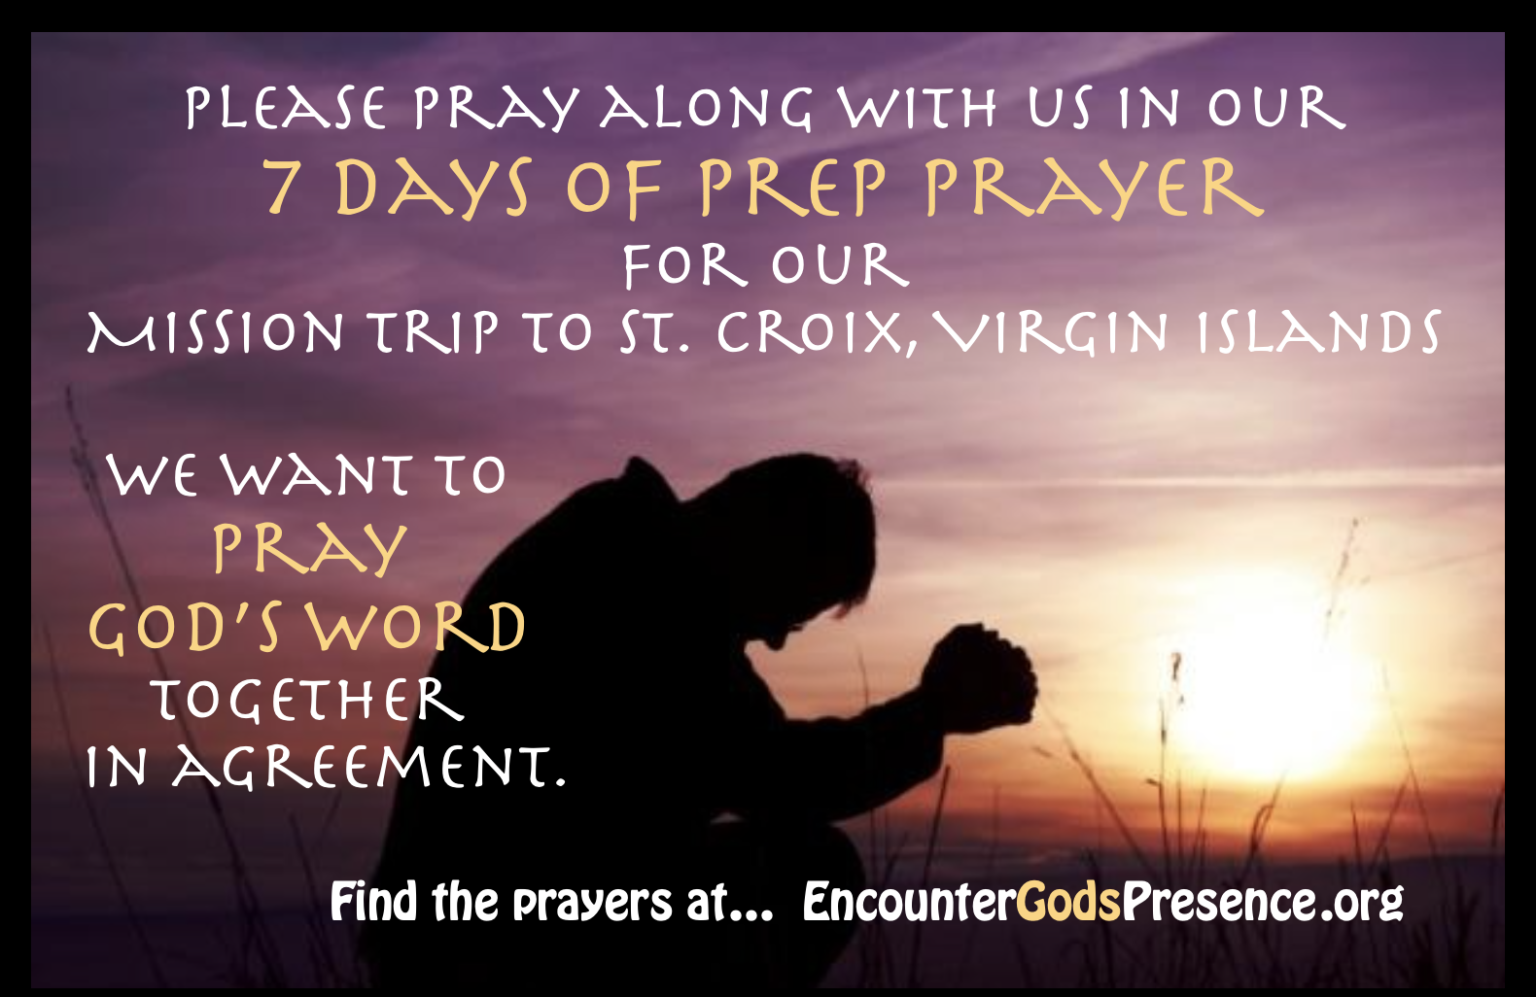 7 Days of Prep Prayer for Mission Trip Encounter God's Presence